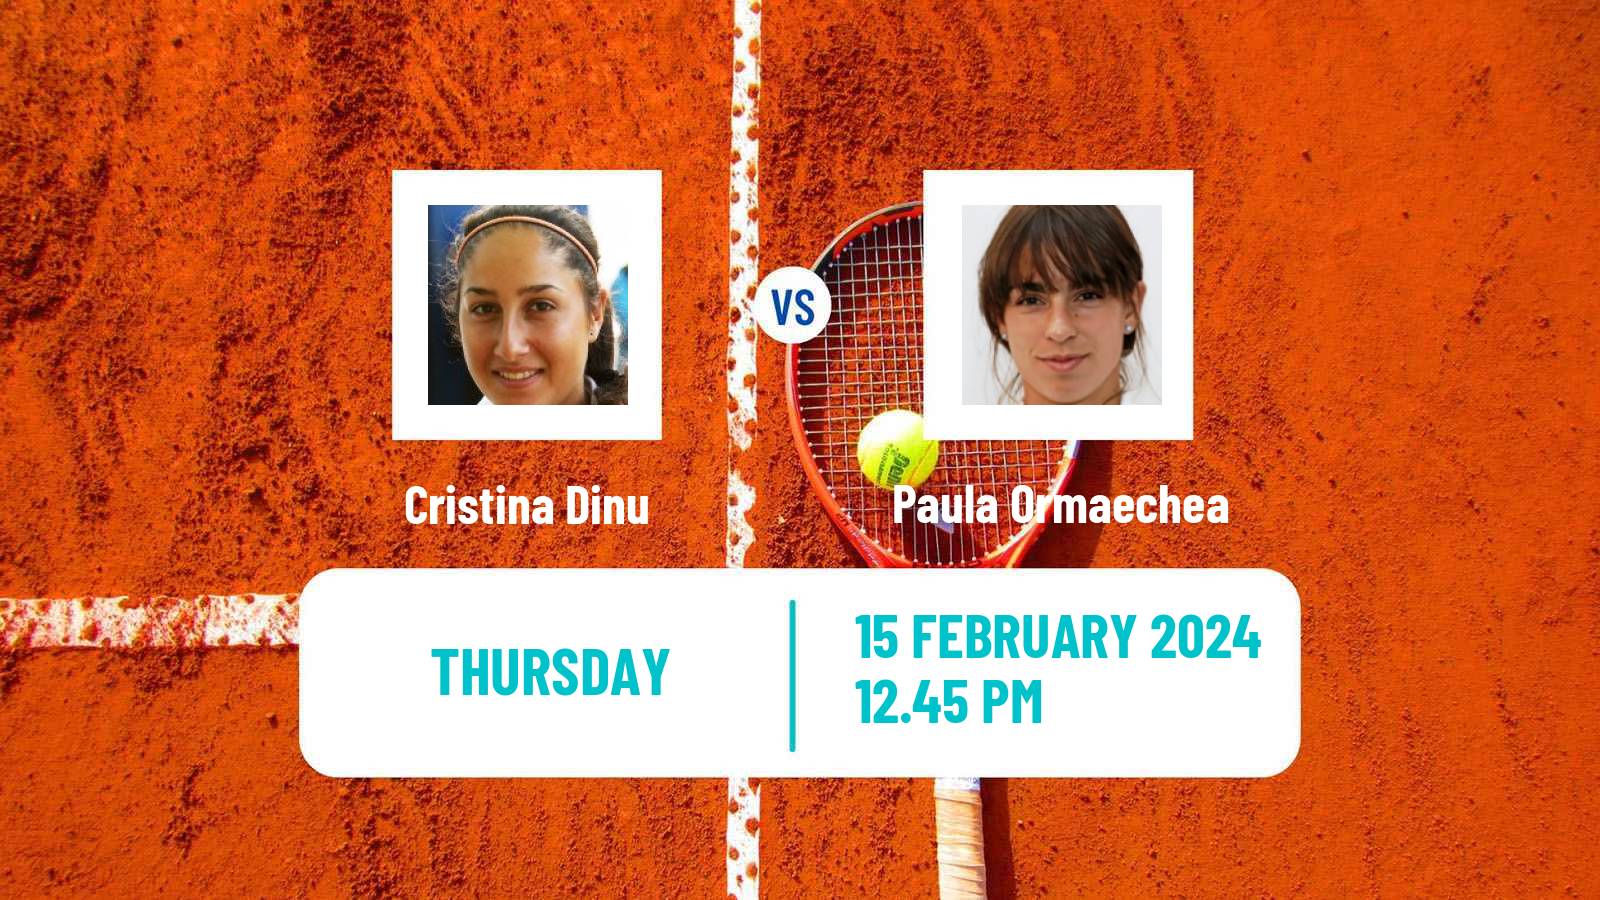 Tennis ITF W35 Antalya 3 Women Cristina Dinu - Paula Ormaechea